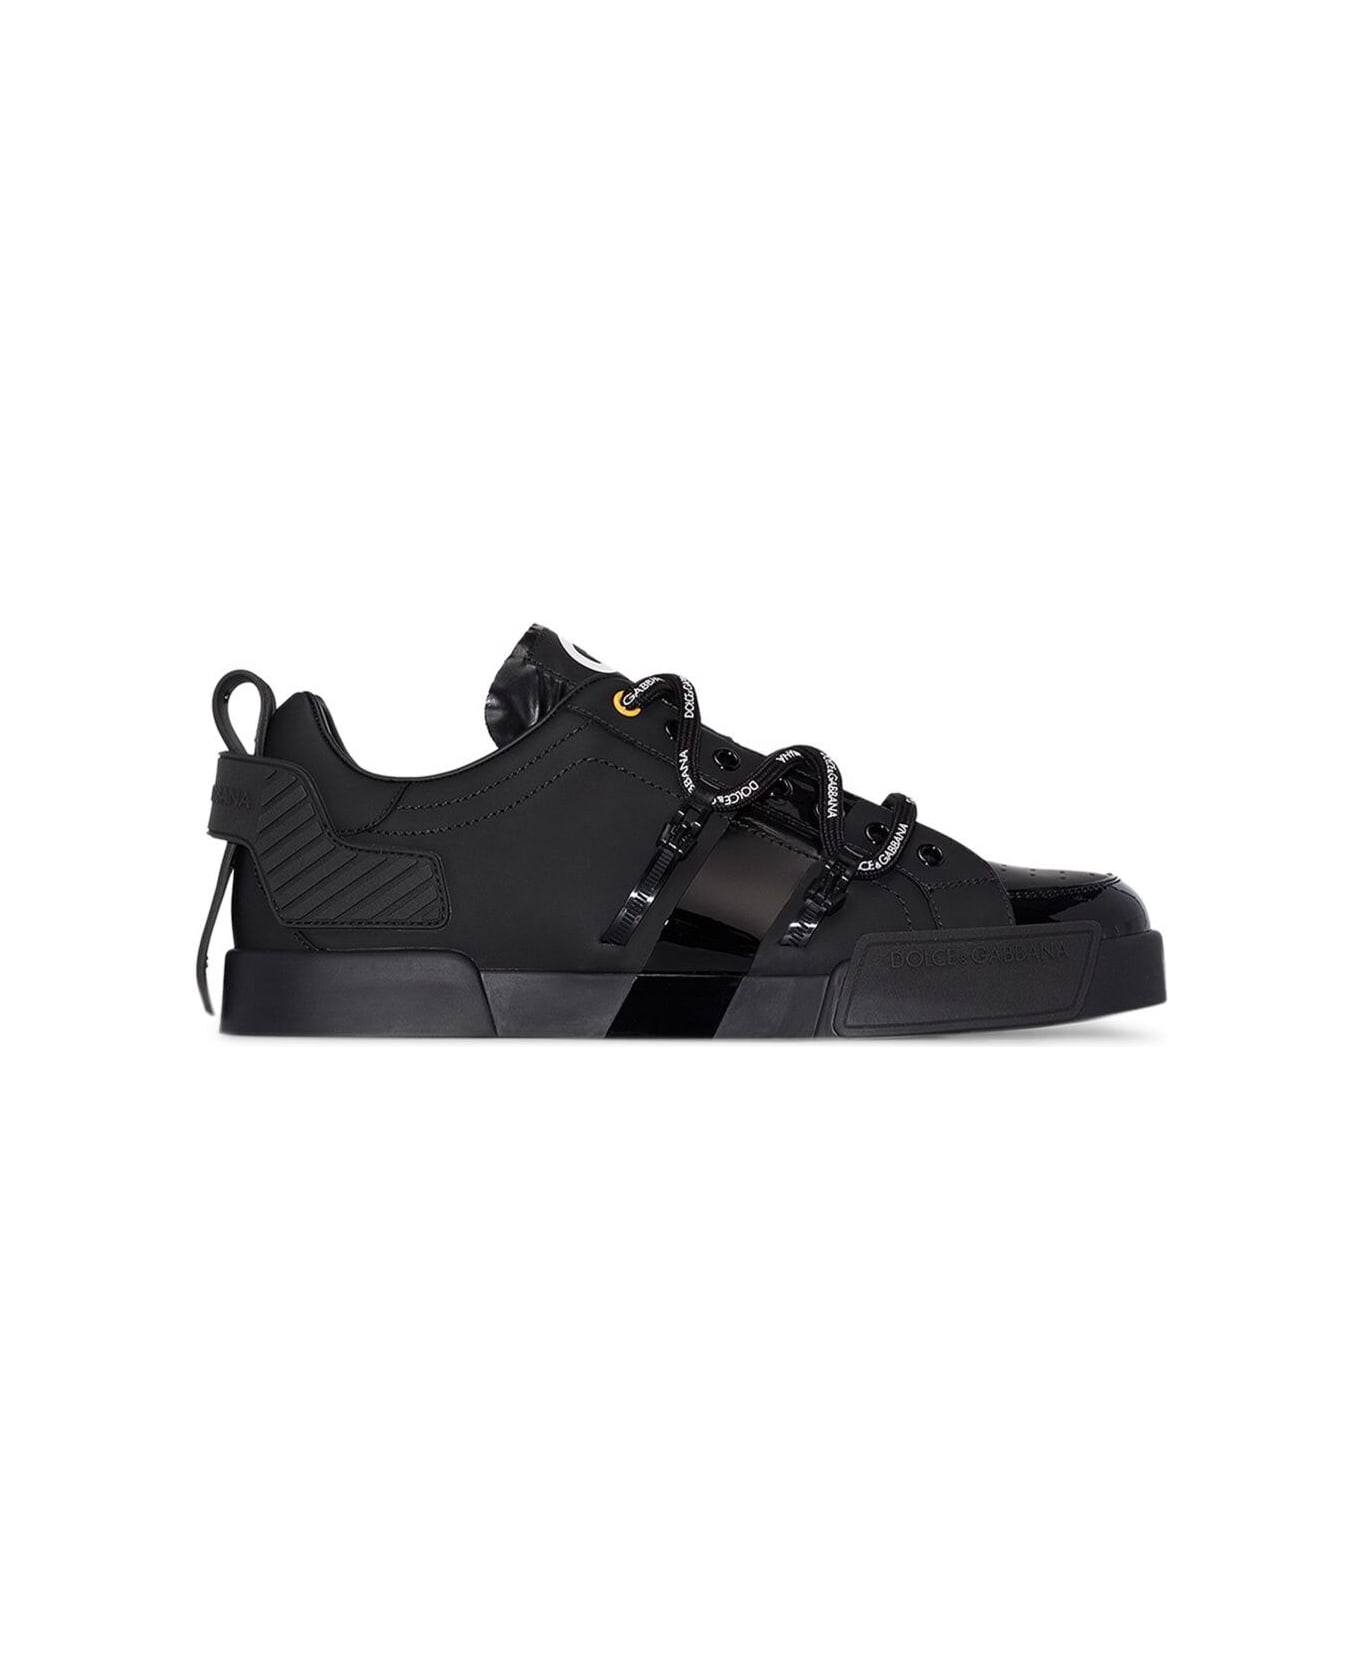 Dolce & Gabbana Man's Portofino Black Leather Sneakers - Black